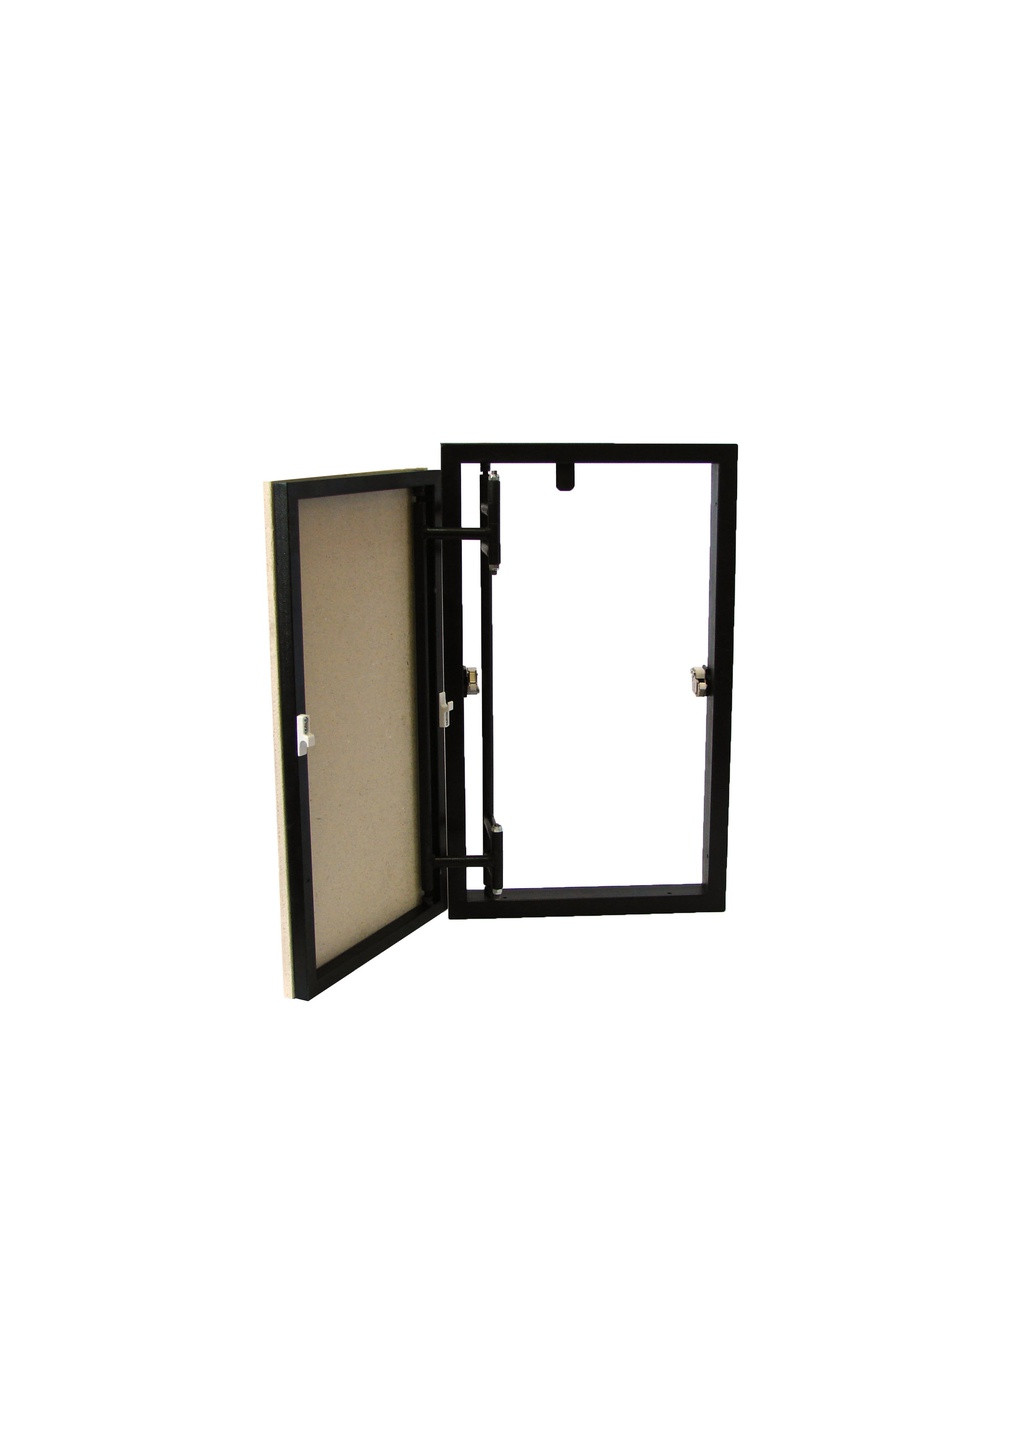 Ревизионный люк скрытого монтажа под плитку нажимного типа 250x500 ревизионная дверца для плитки (1120) S-Dom (264209612)